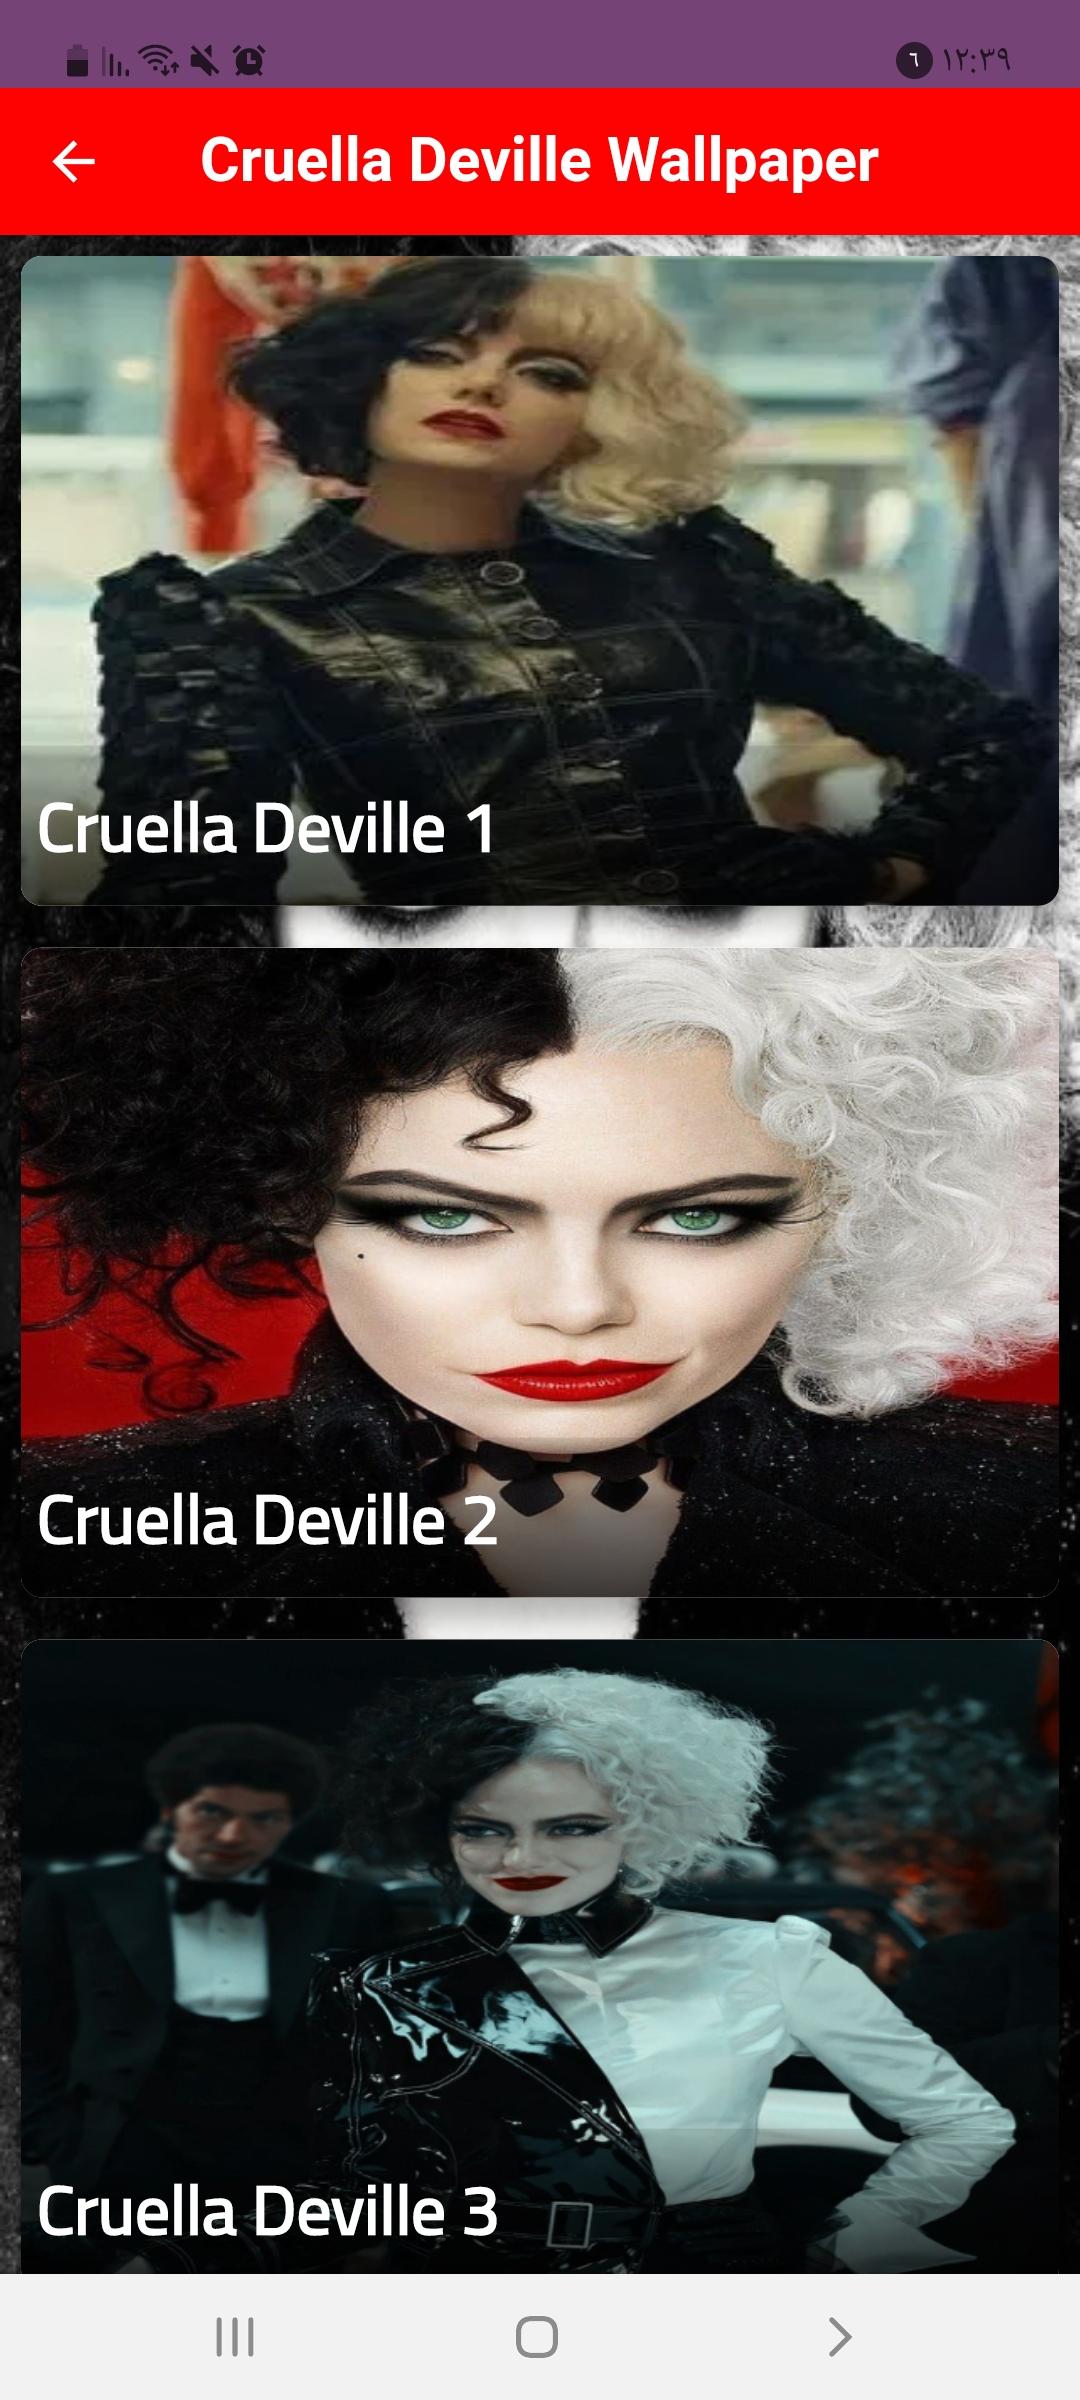 Cruella Deville Wallpaper 3 Screenshot 6